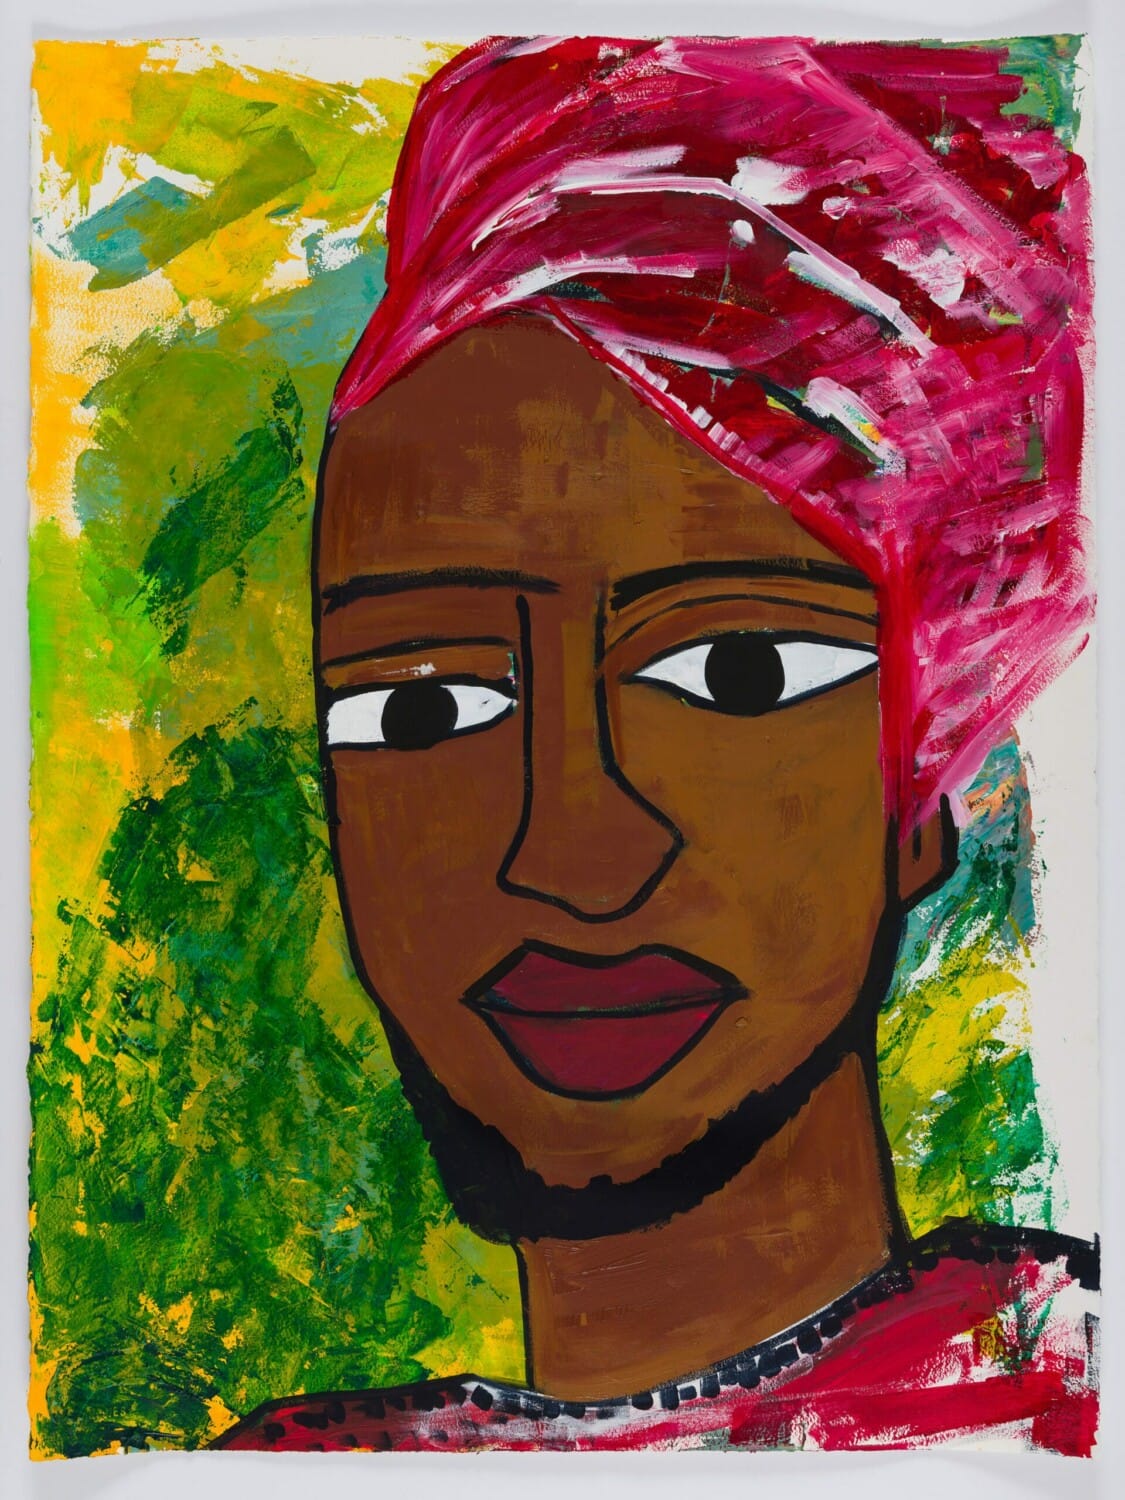 Leilah Babirye, 'Kuchu Ndagamuntu (Queer Identity Card)', 2021. Acrylic on paper, 76 x 56cm (30 x 22in). Framed: 84 x 65cm (33 1/8 x 25 5/8in). Copyright Leilah Babirye. Courtesy the artist and Stephen Friedman Gallery, London. Photo by Mark Blower.